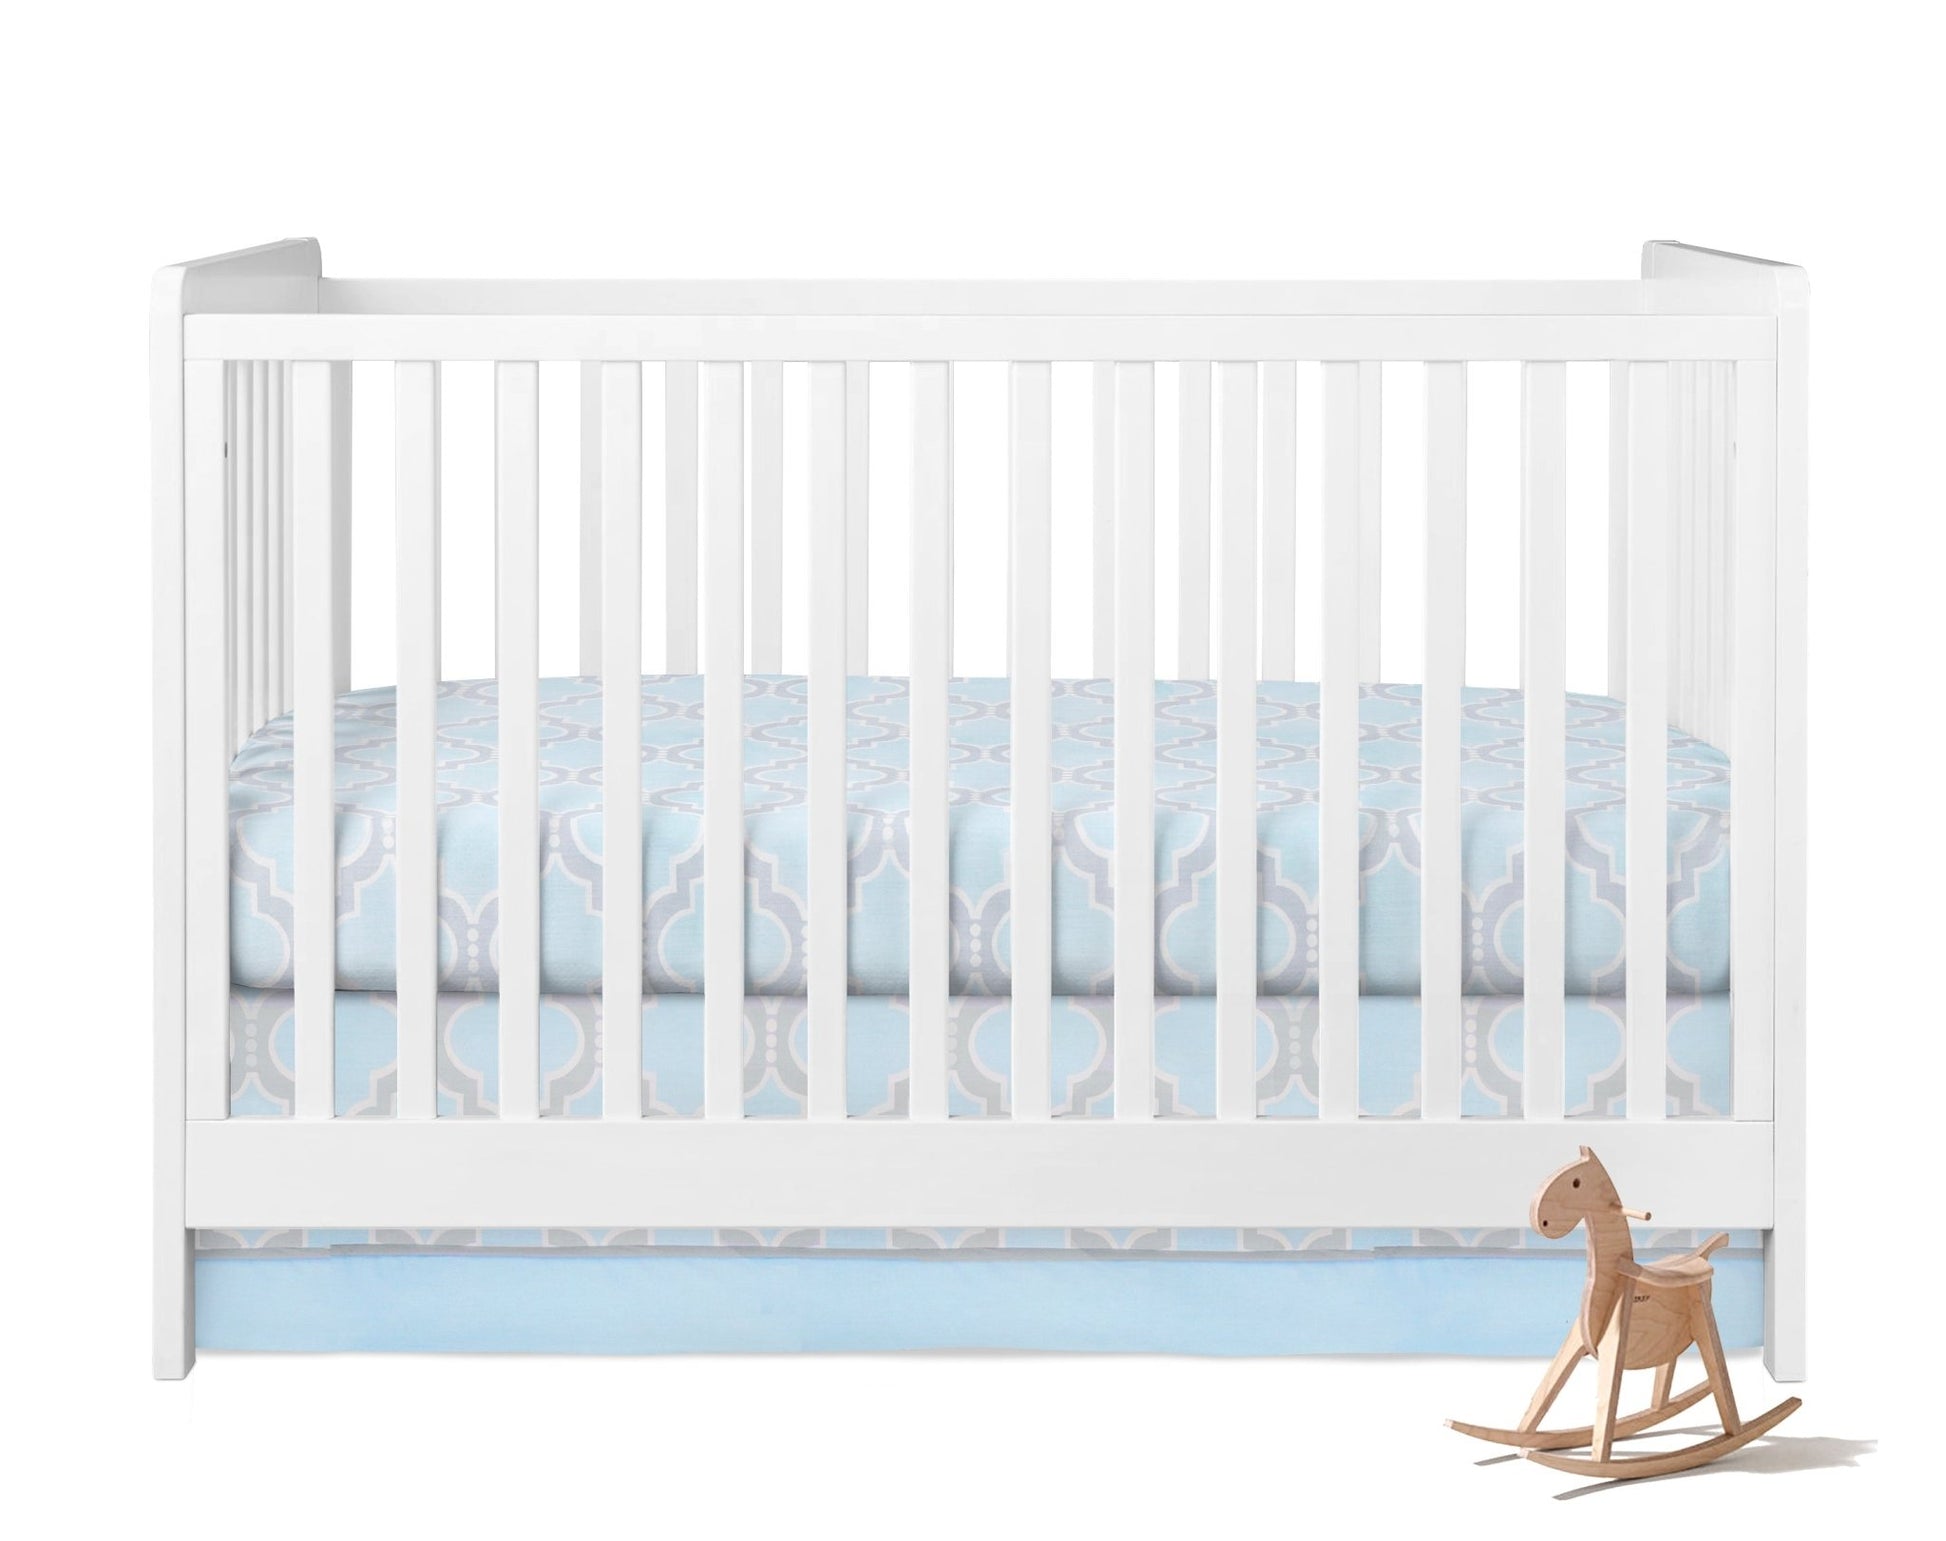 Blue Medallion 10 Piece Crib Bedding Set - New Arrivals Inc